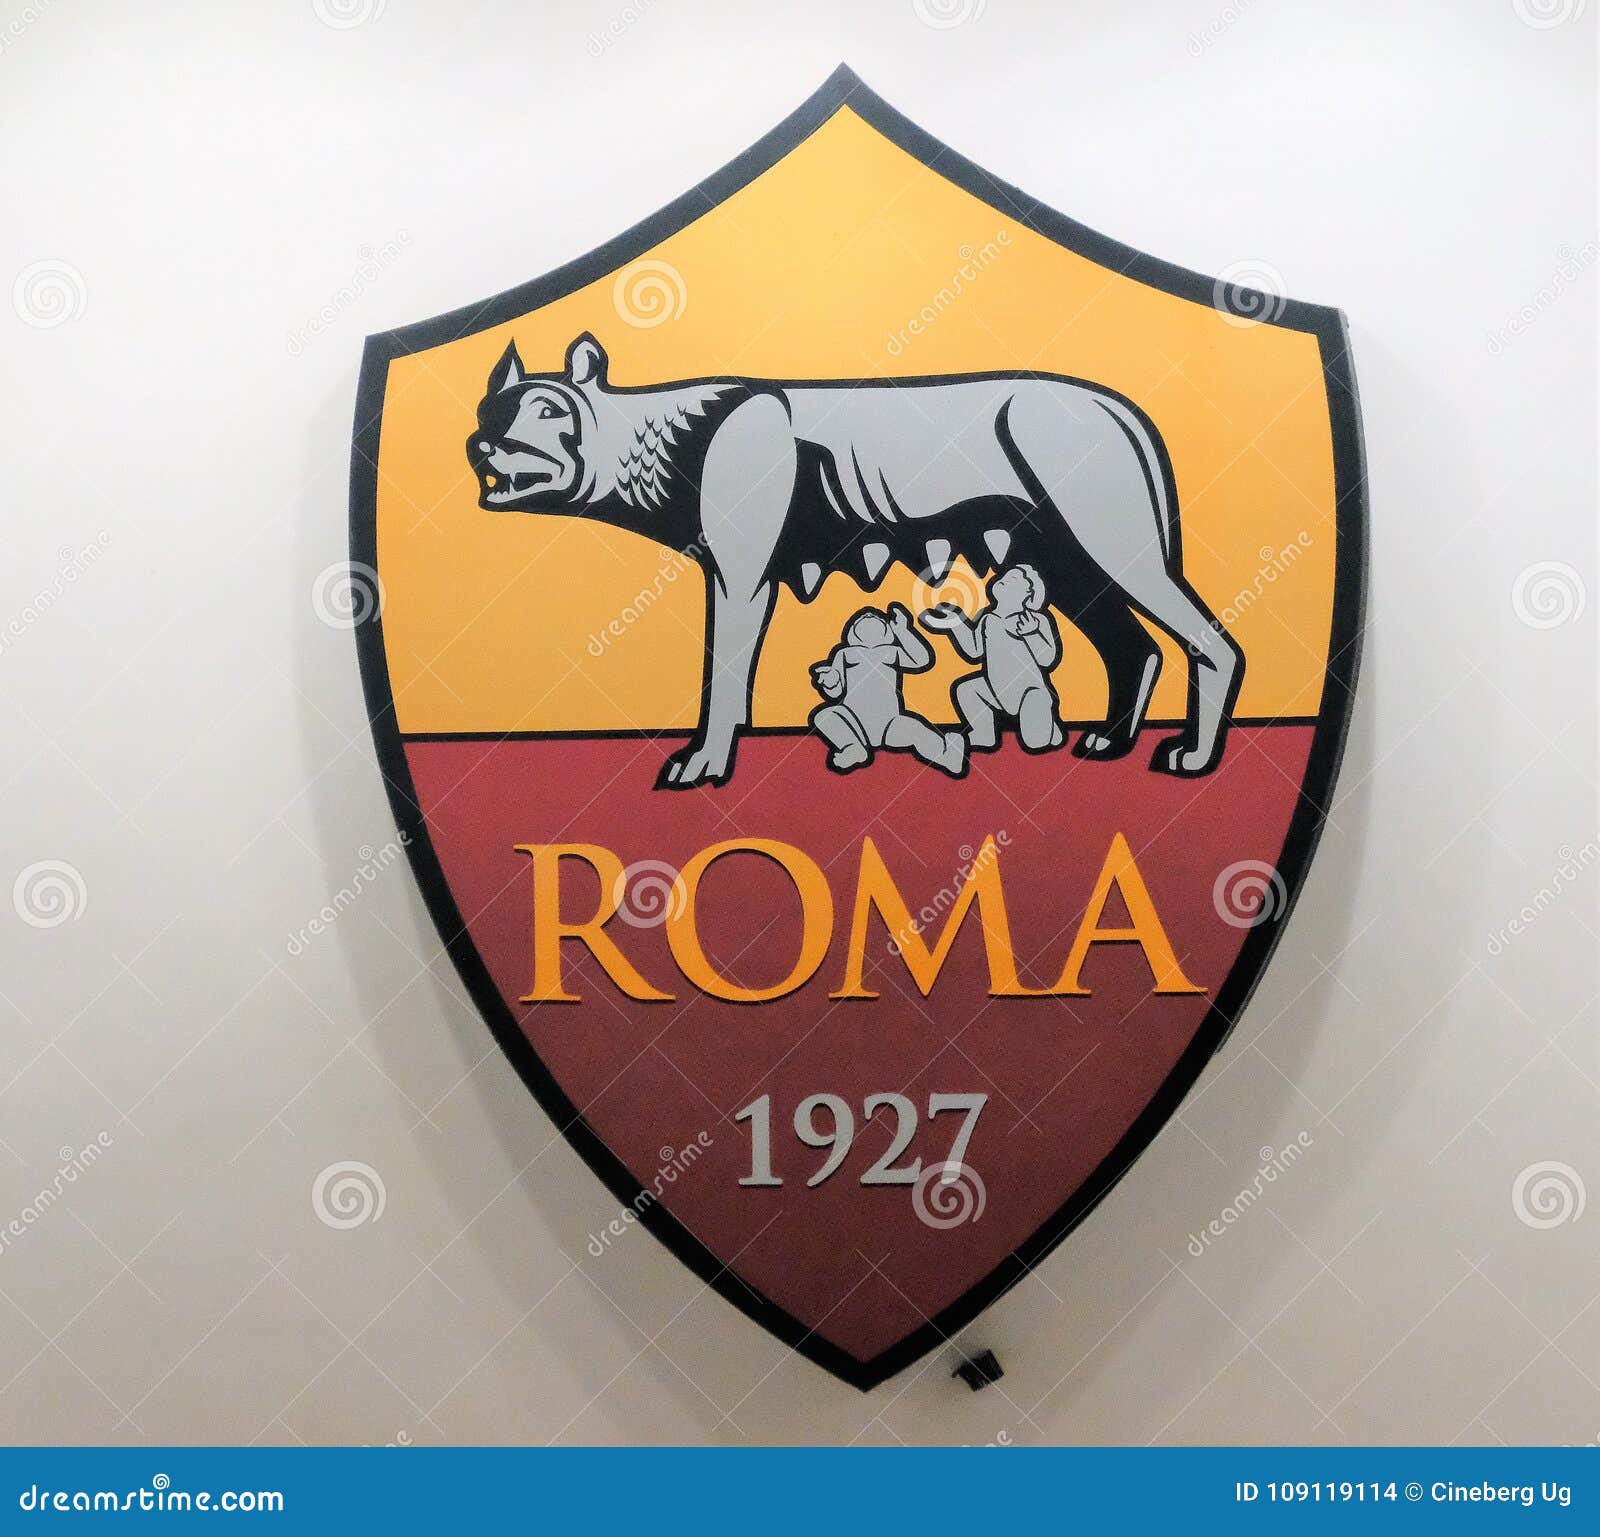 Football Kit. Rome. Editorial Photo | CartoonDealer.com #127923217